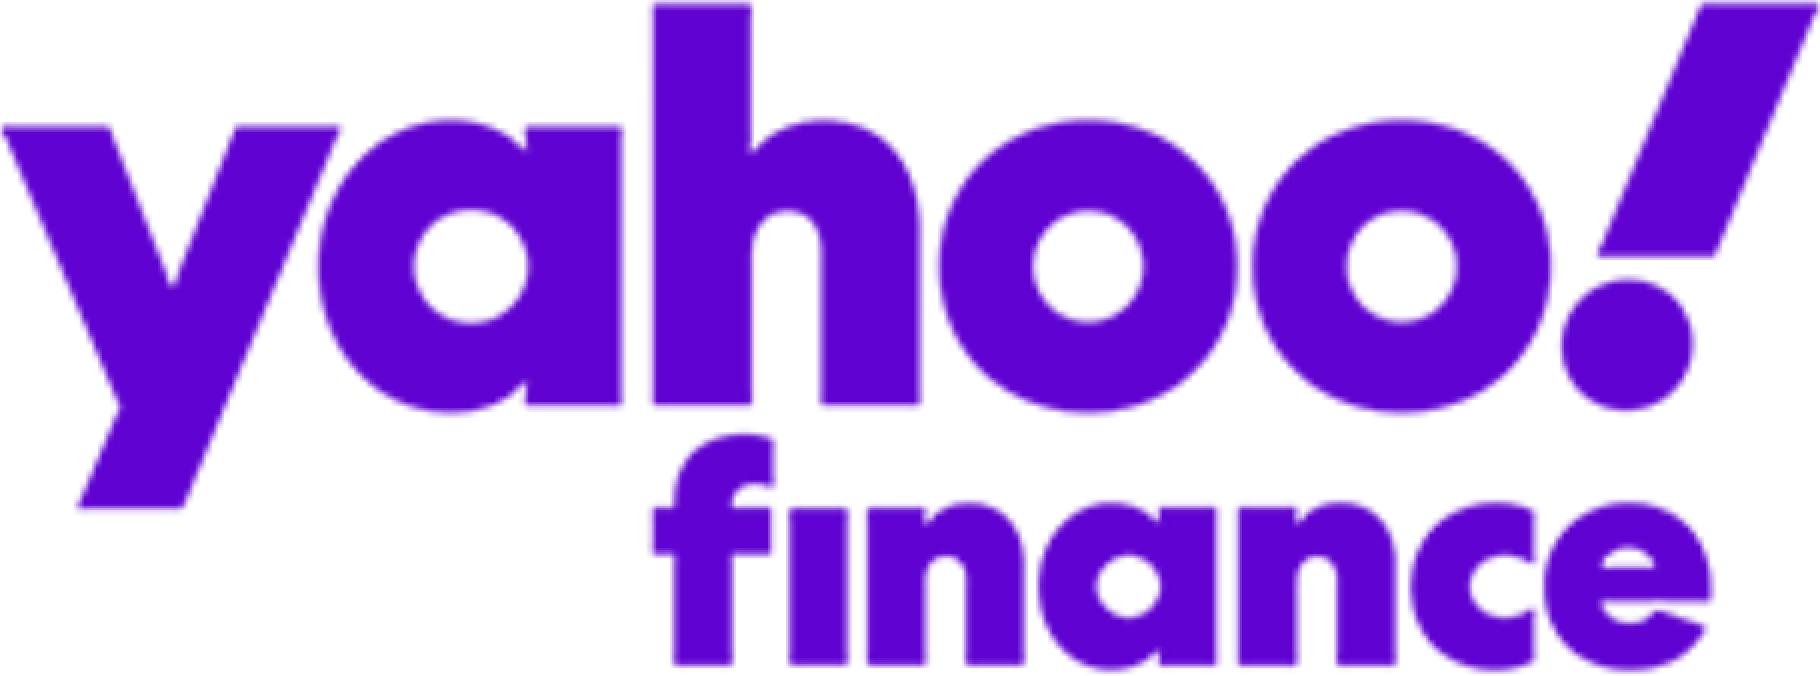 Yahoo Finance-1